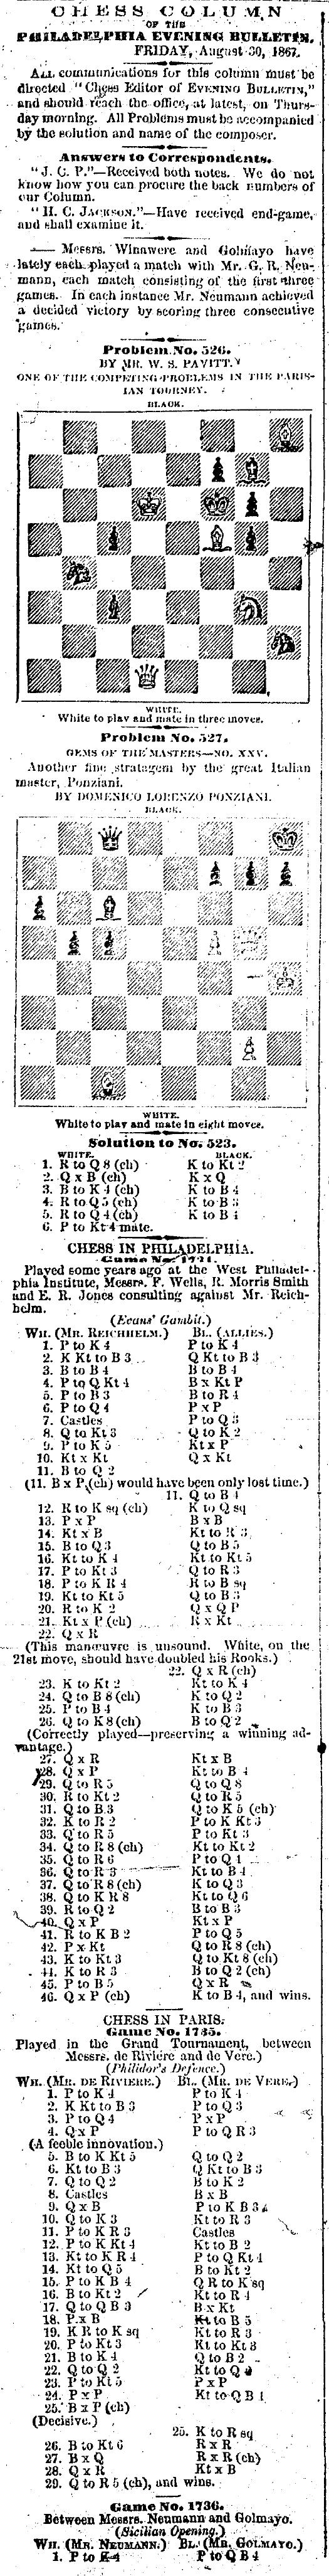 1867.08.30-01 Philadelphia Daily Evening Bulletin.jpg